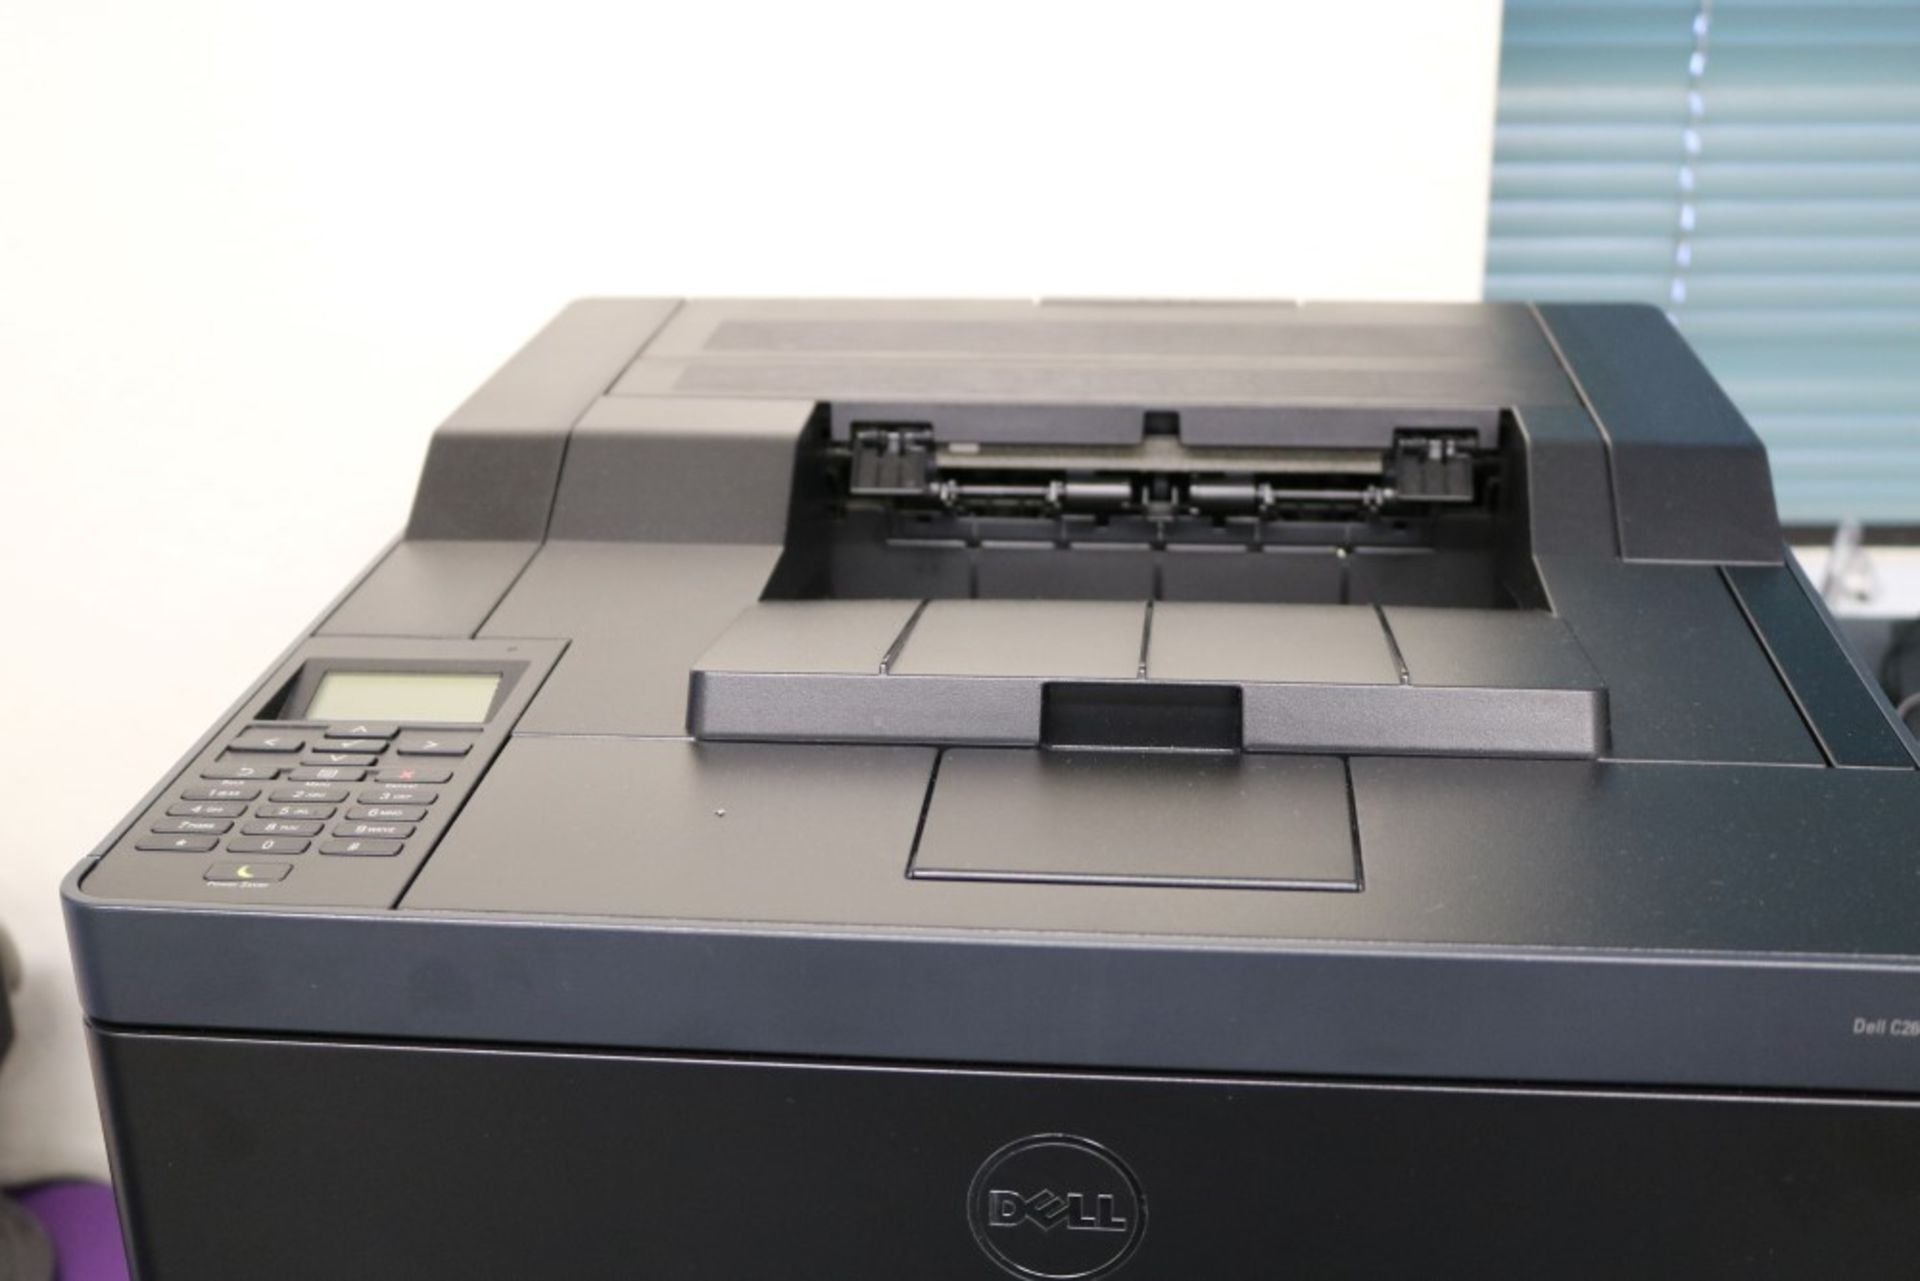 Dell C2660DN Laser Printer - Image 3 of 5